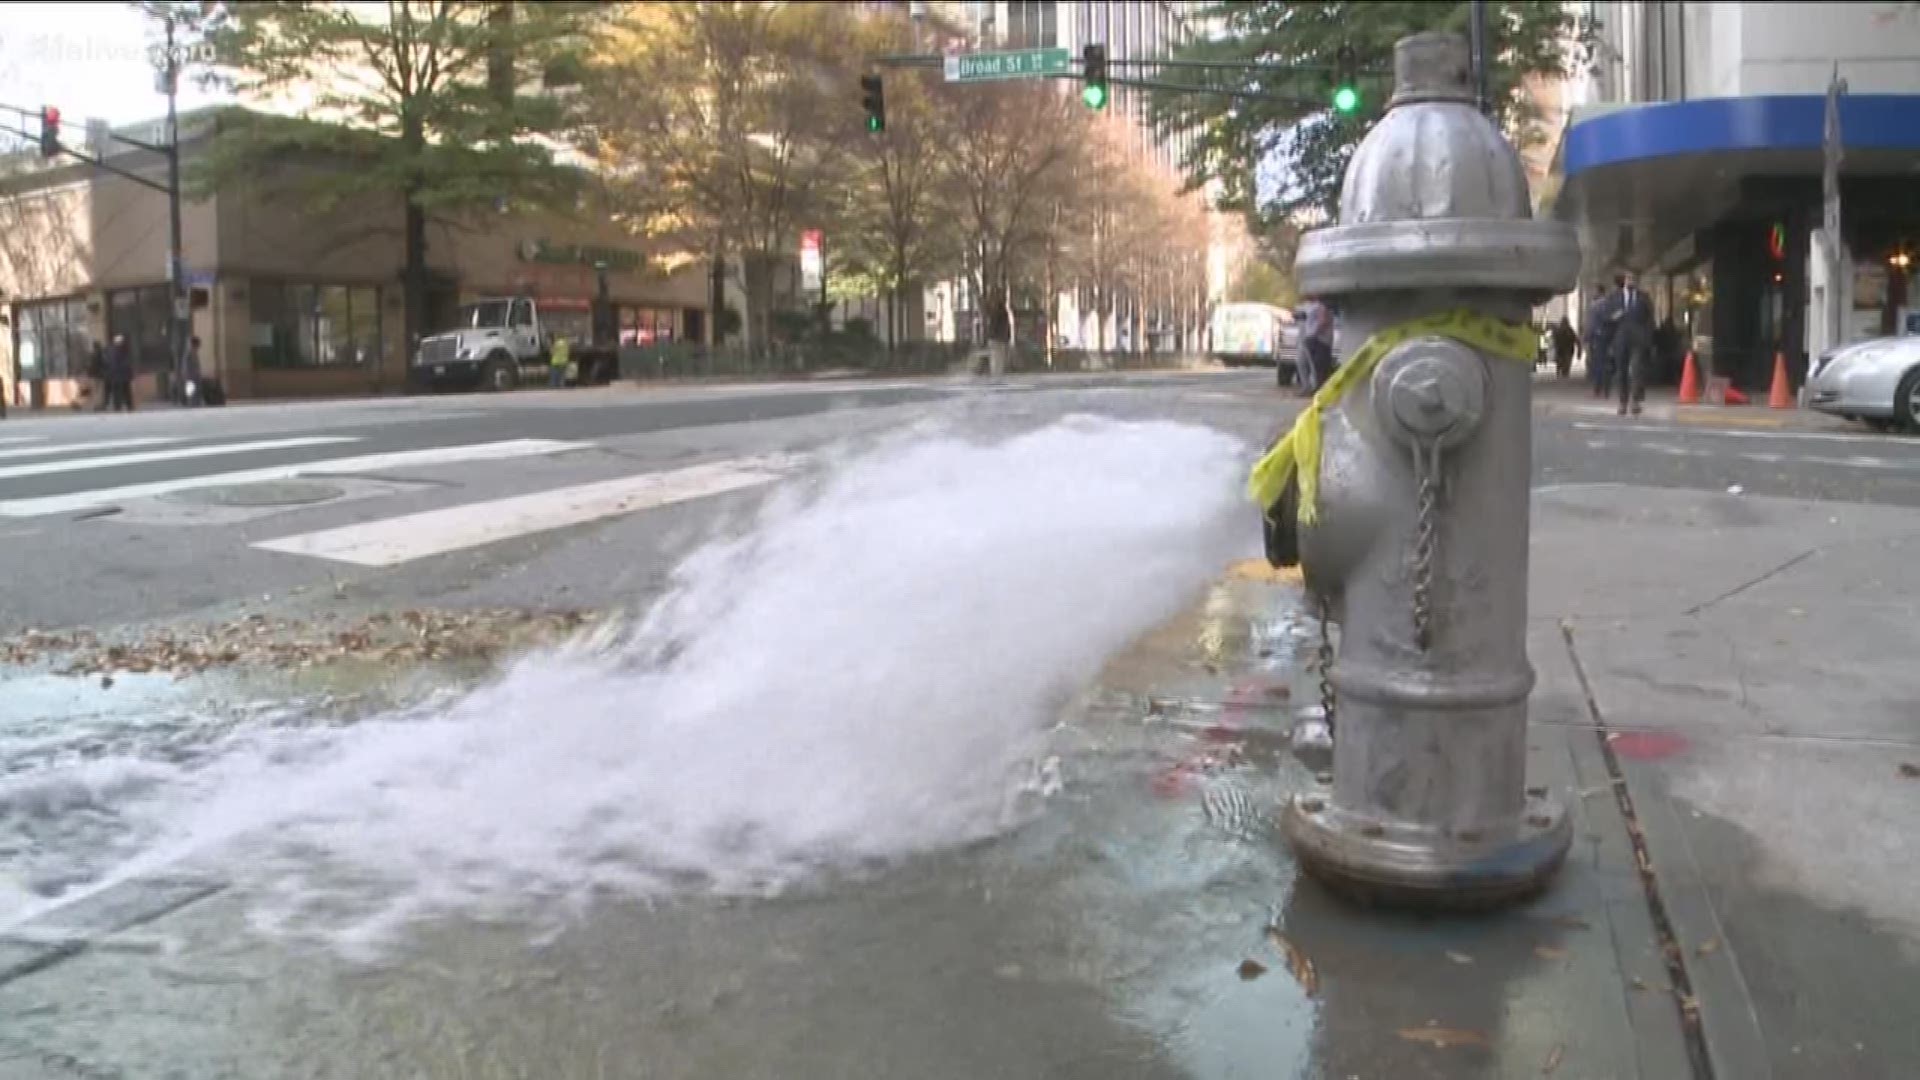 Atlanta lifted its boil water advisory on Tuesday.